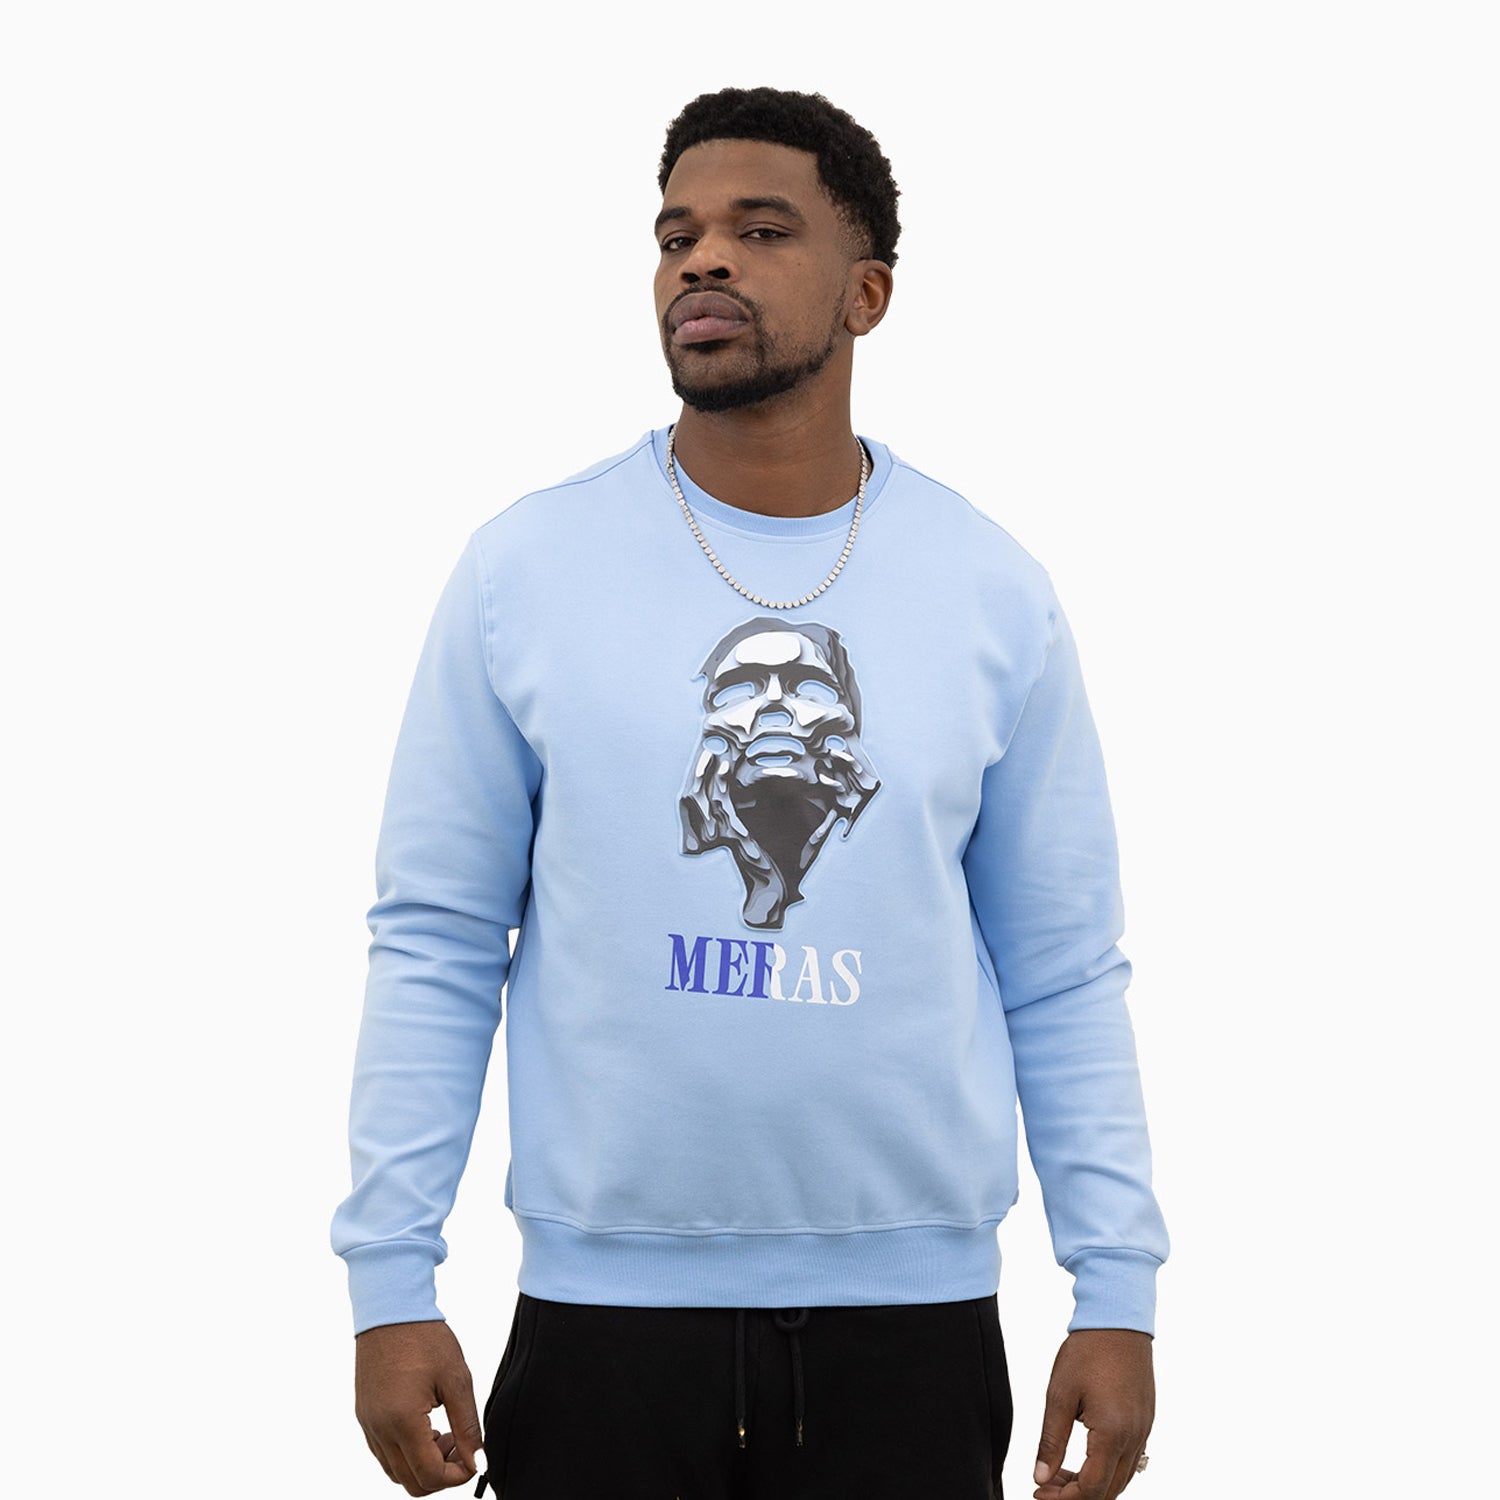 meras-mens-classic-logo-crew-neck-sweatshirt-mc2303-blue